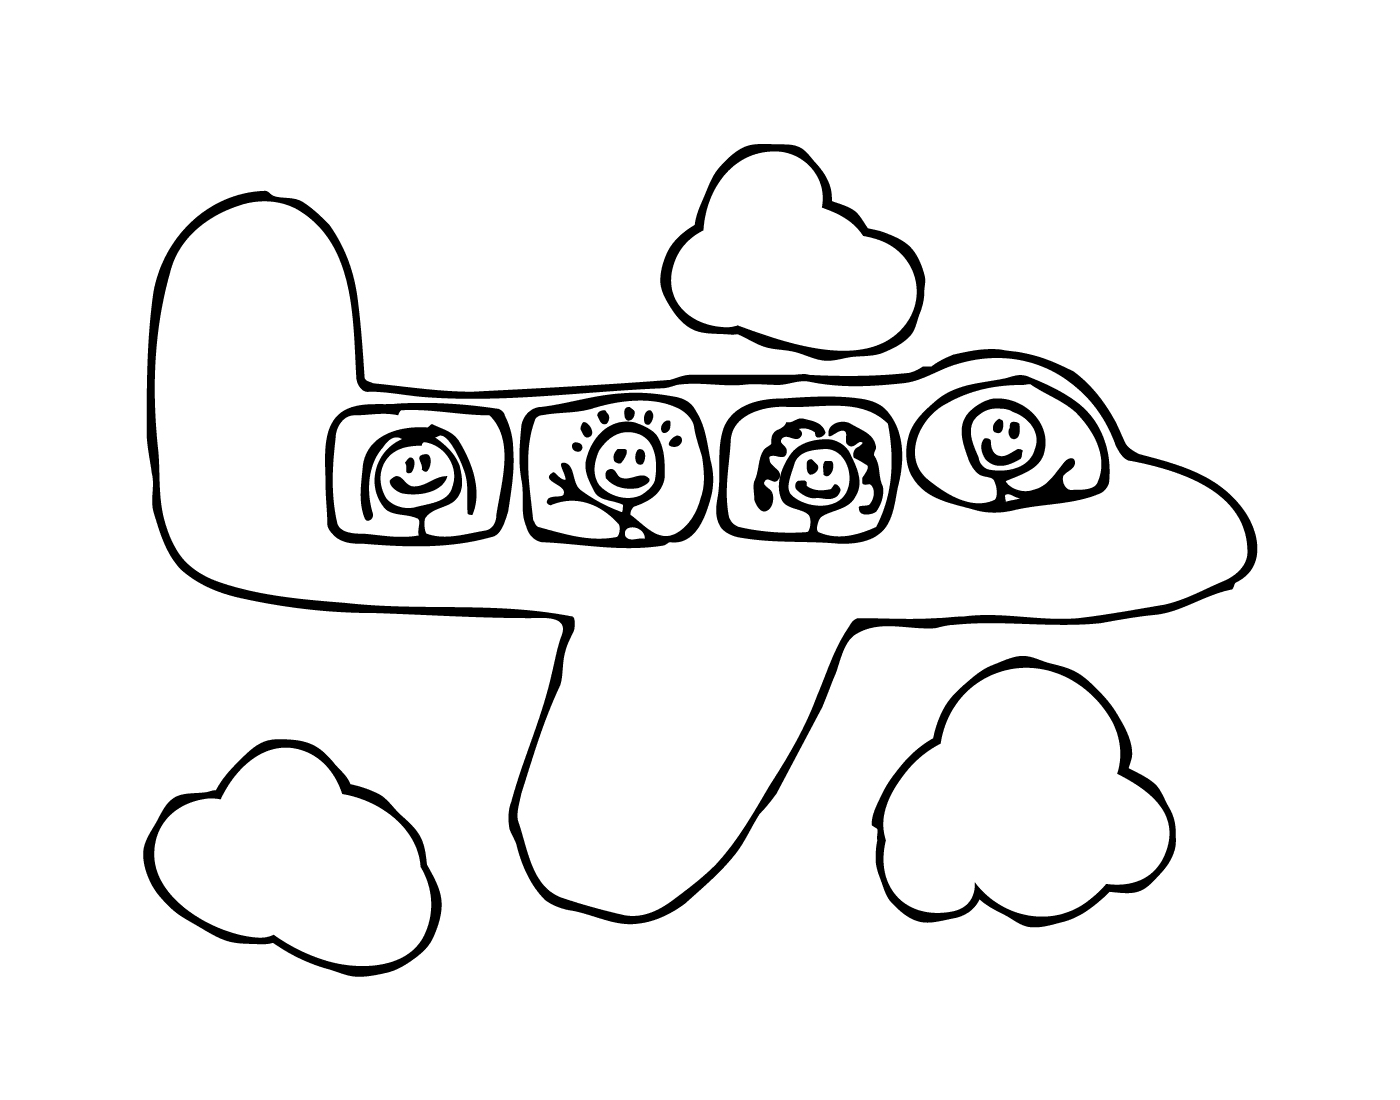  Самолёт с четырьмя людьми на борту 